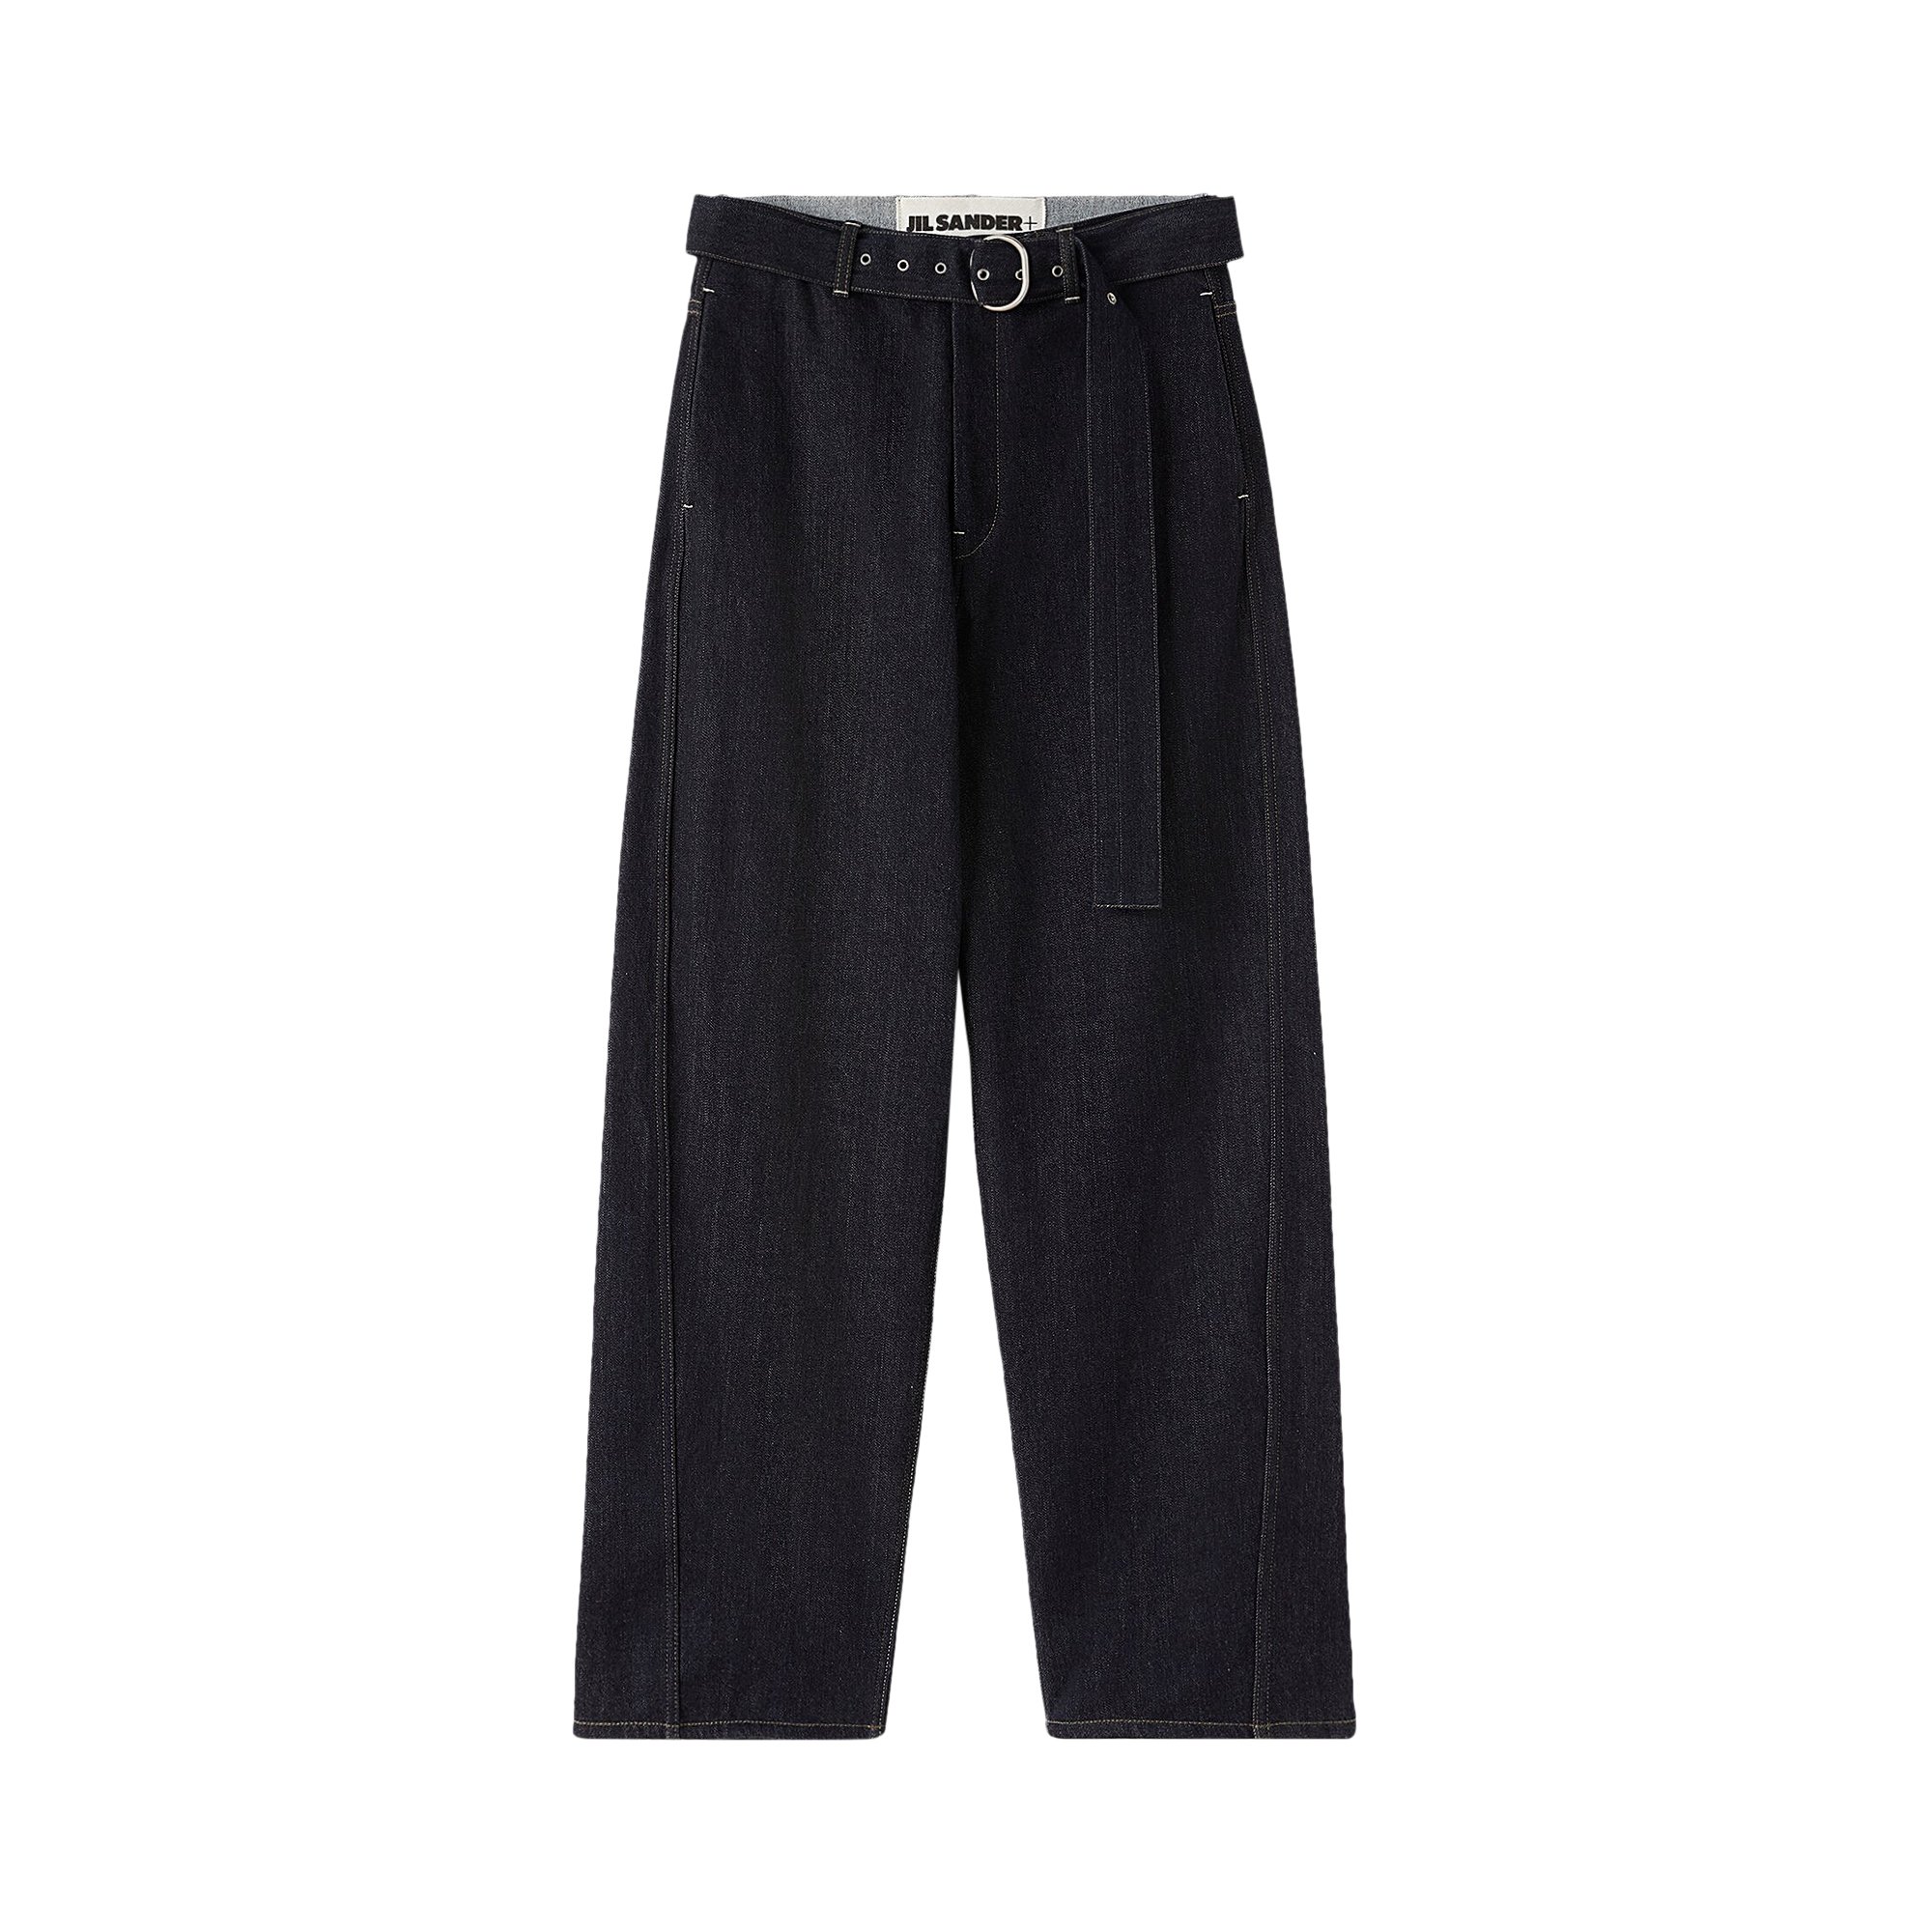 Buy Jil Sander Denim Trousers 'Deft Blue' - J47KA0138 J46569 405 